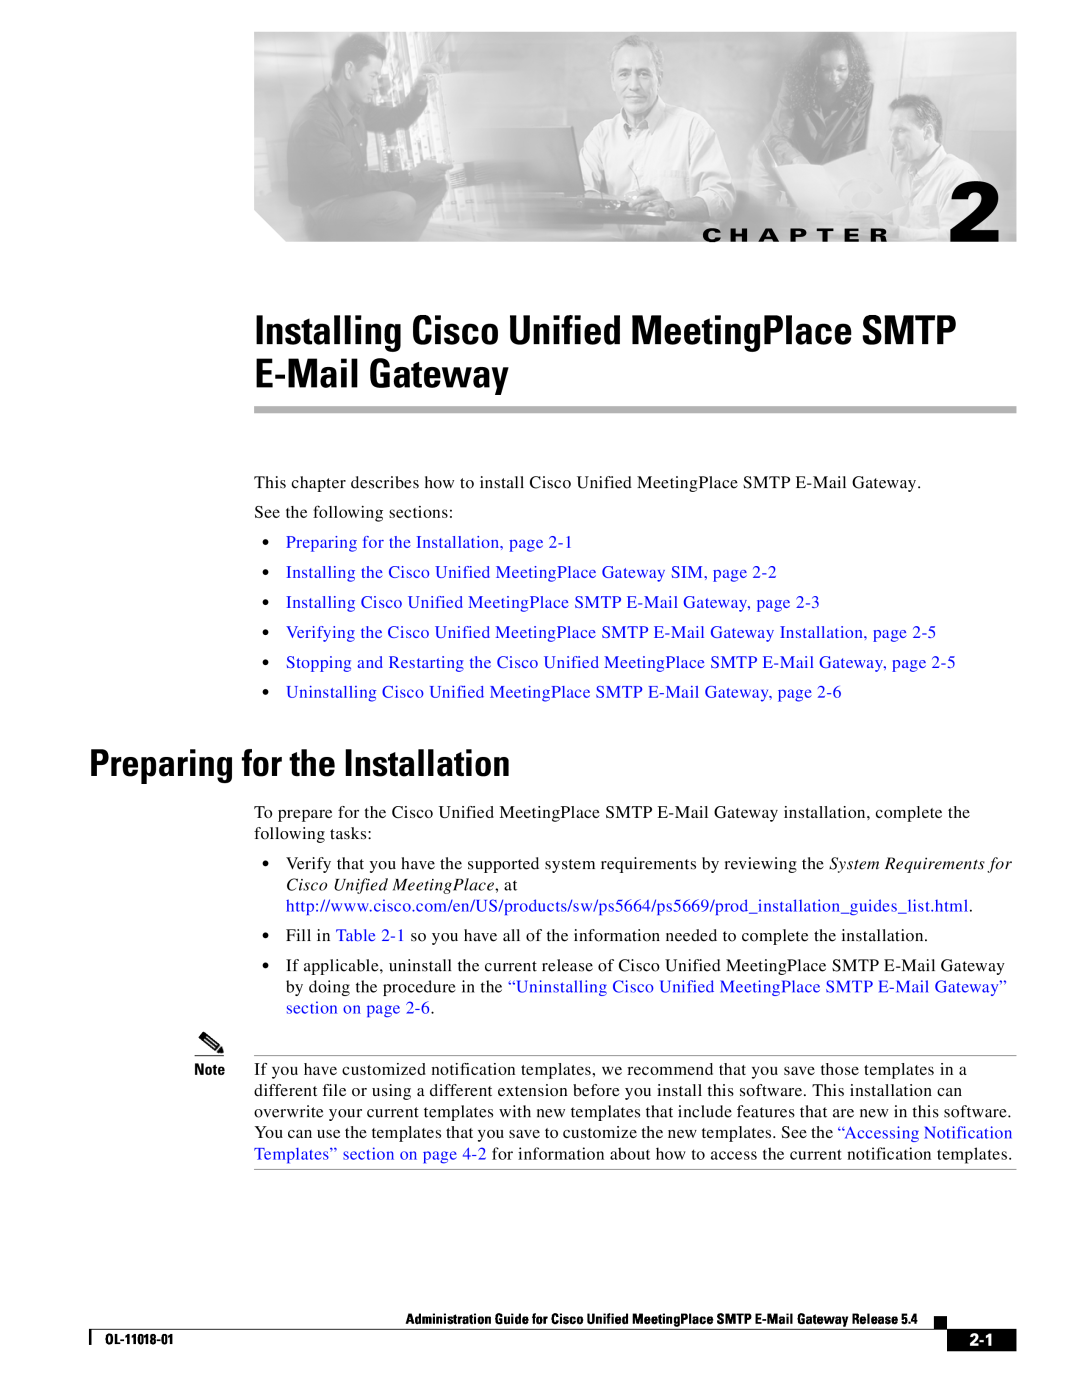 Cisco Systems manual Installing Cisco Unified MeetingPlace SMTP E-Mail Gateway, C H A P T E R 